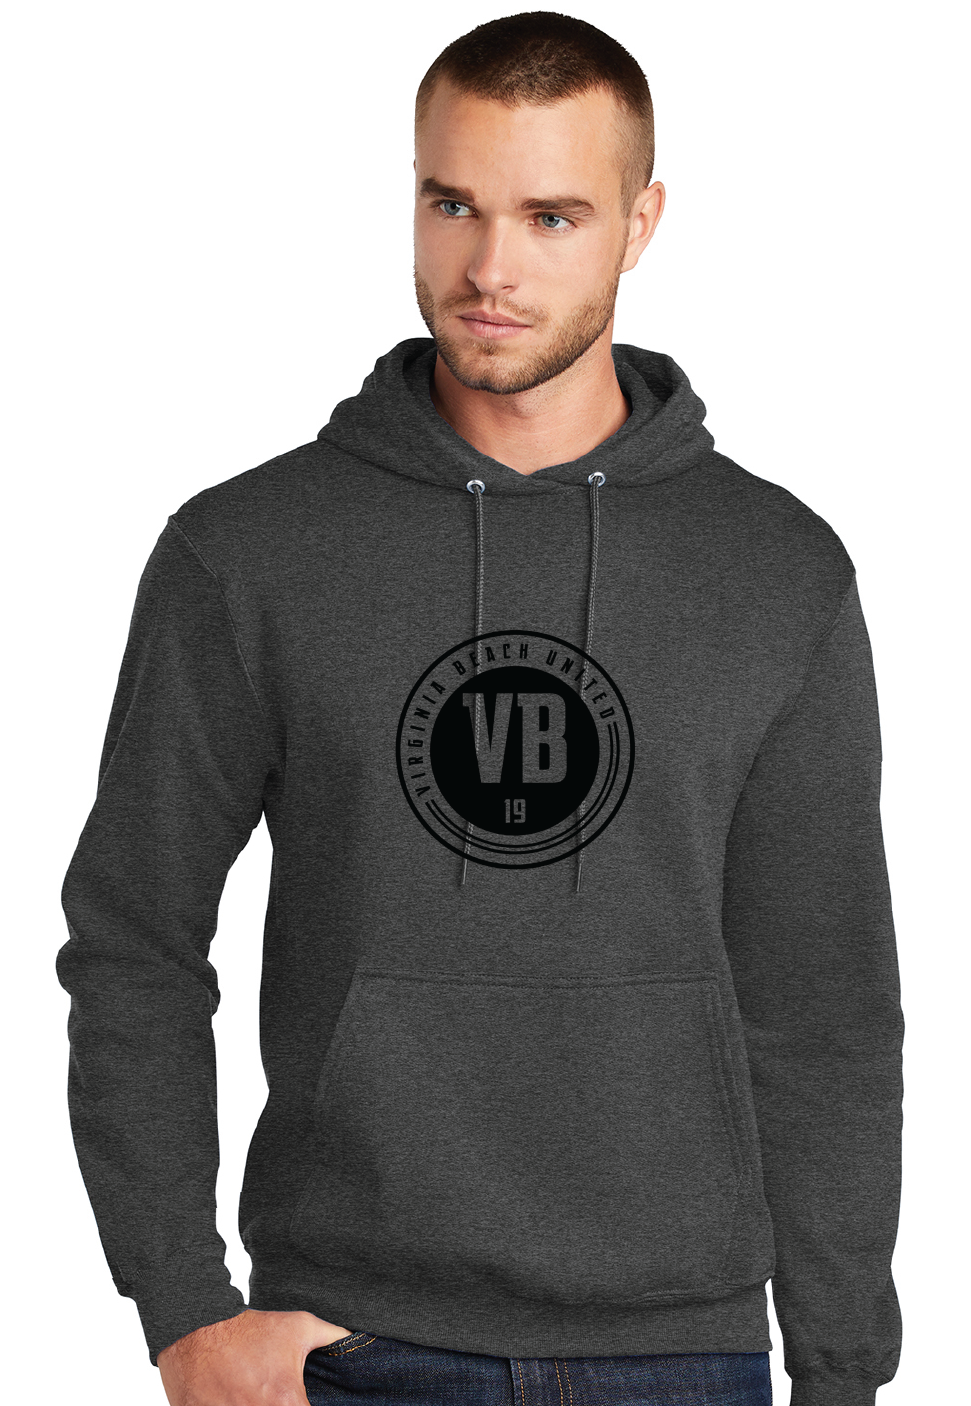 Core Fleece Pullover Hooded Sweatshirt / Dark Heather Charcoal / VB United